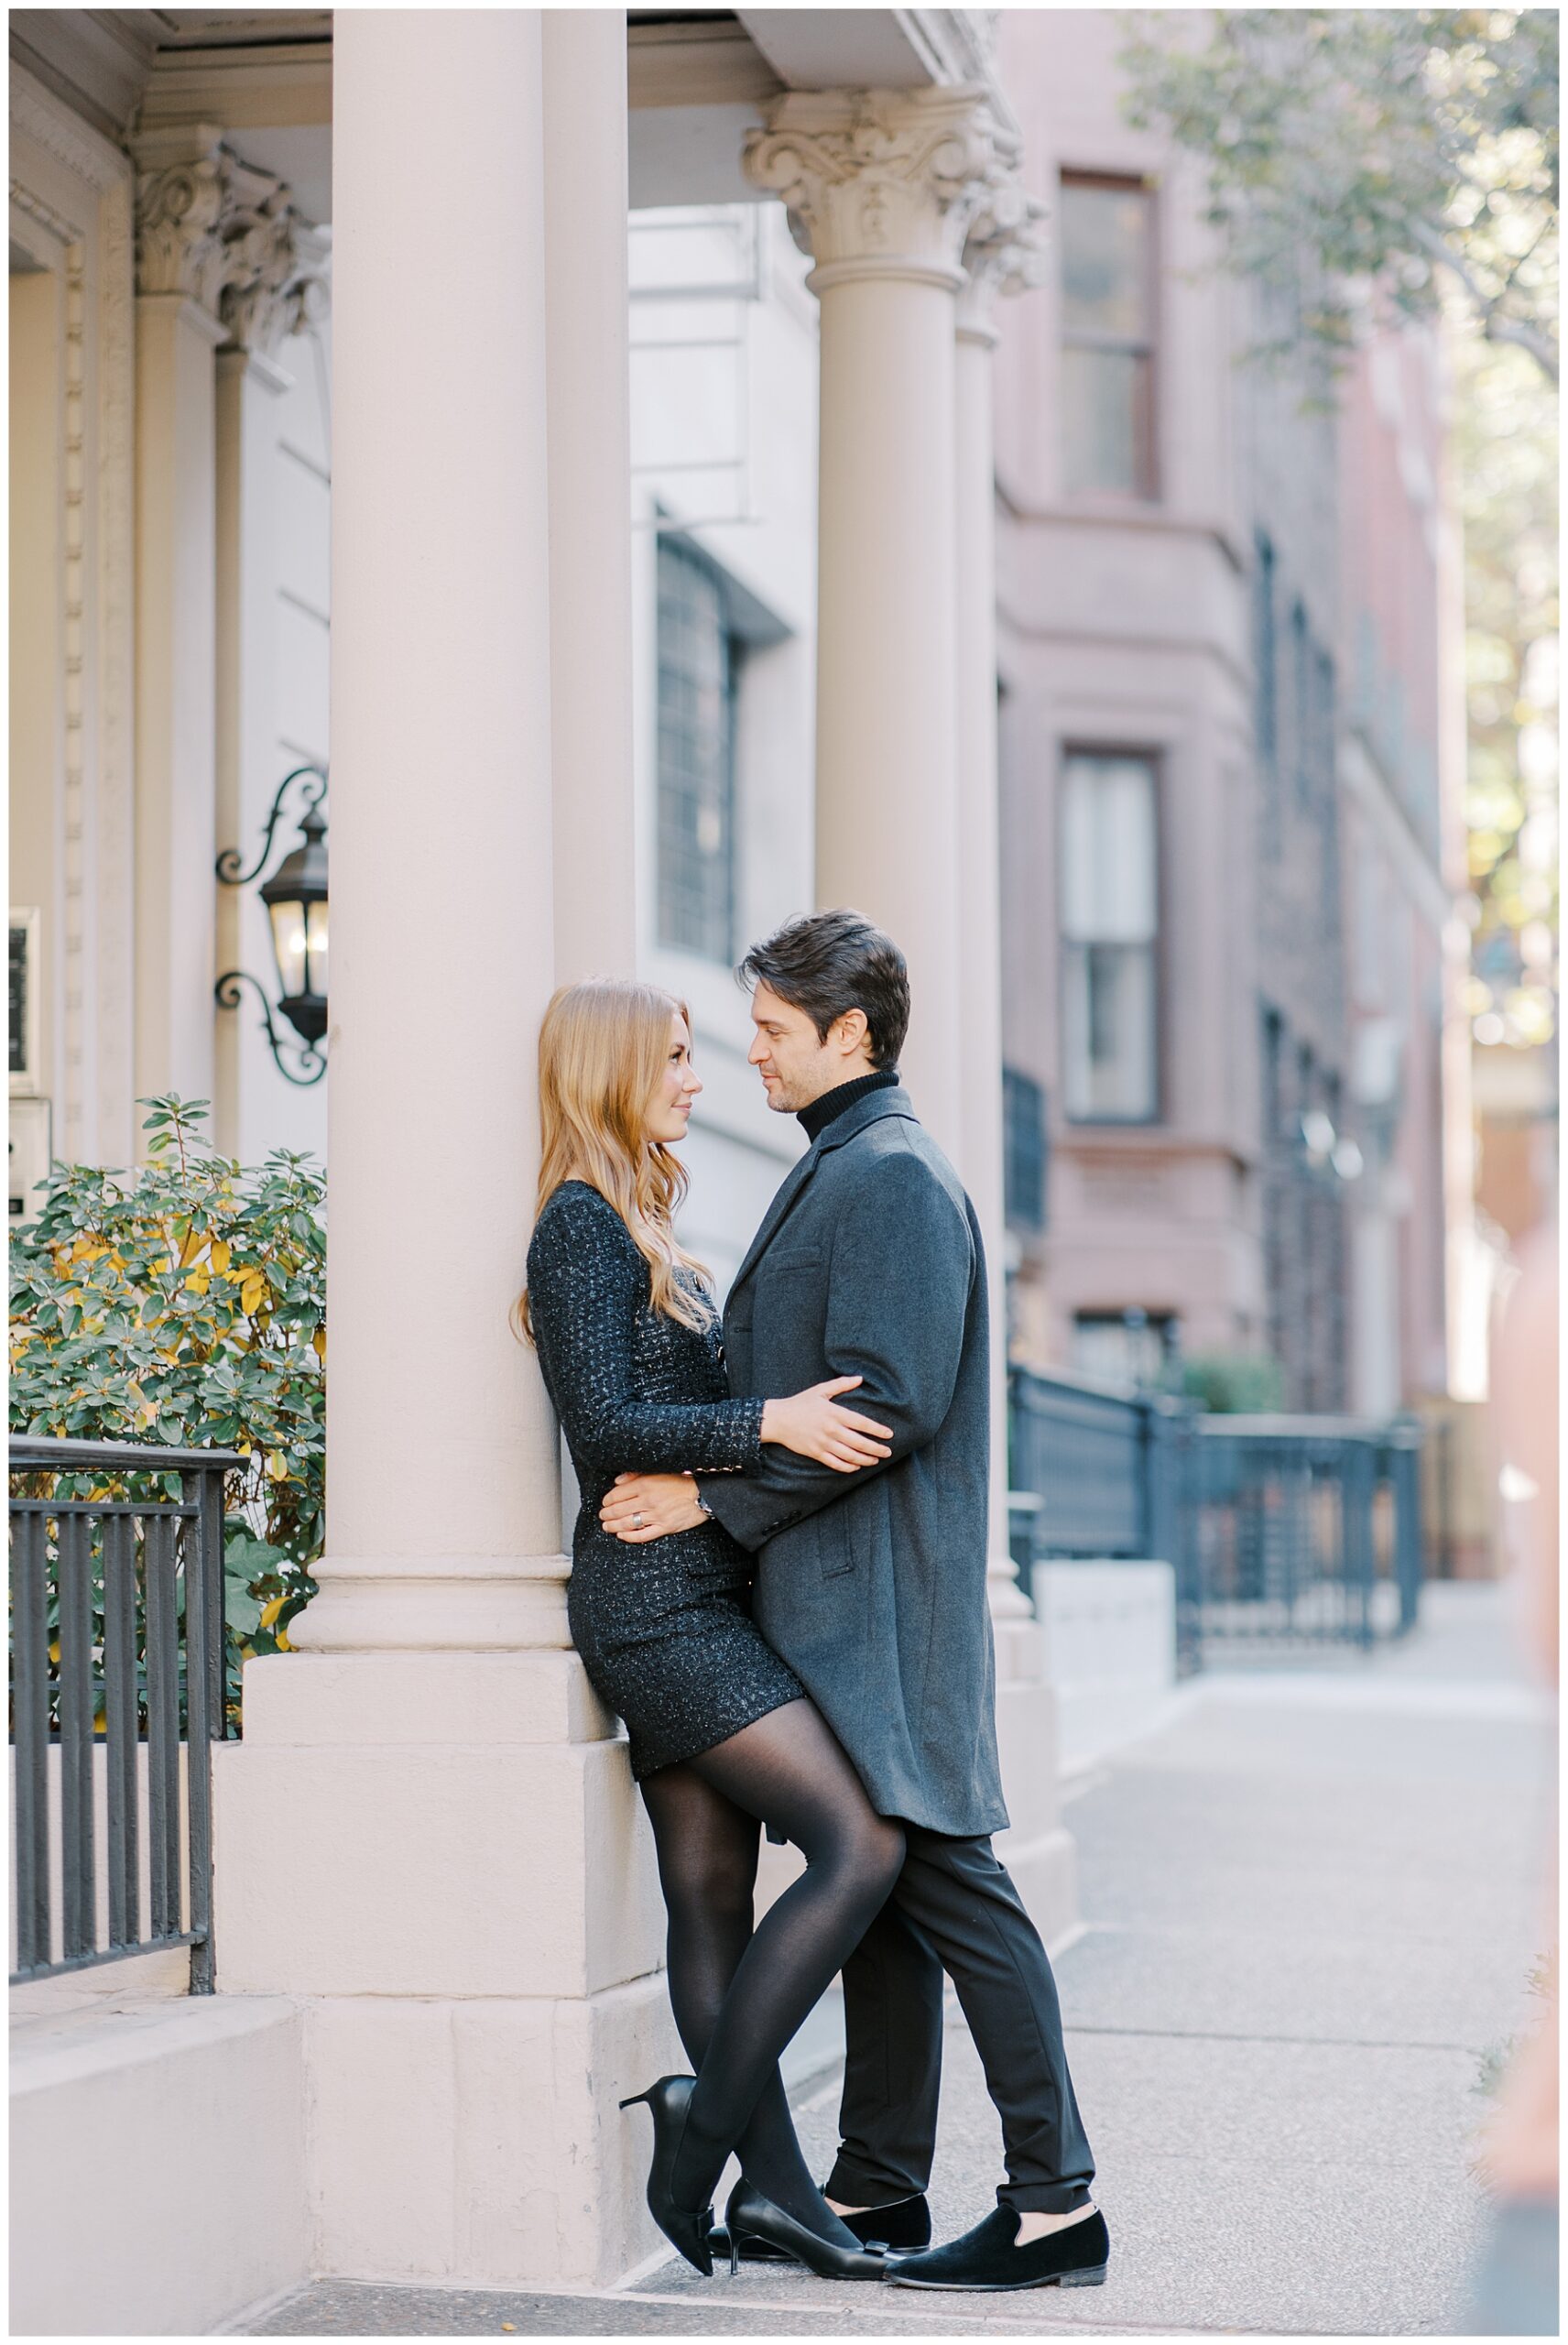 Romantic engagement portraits of couple leaning against classic building